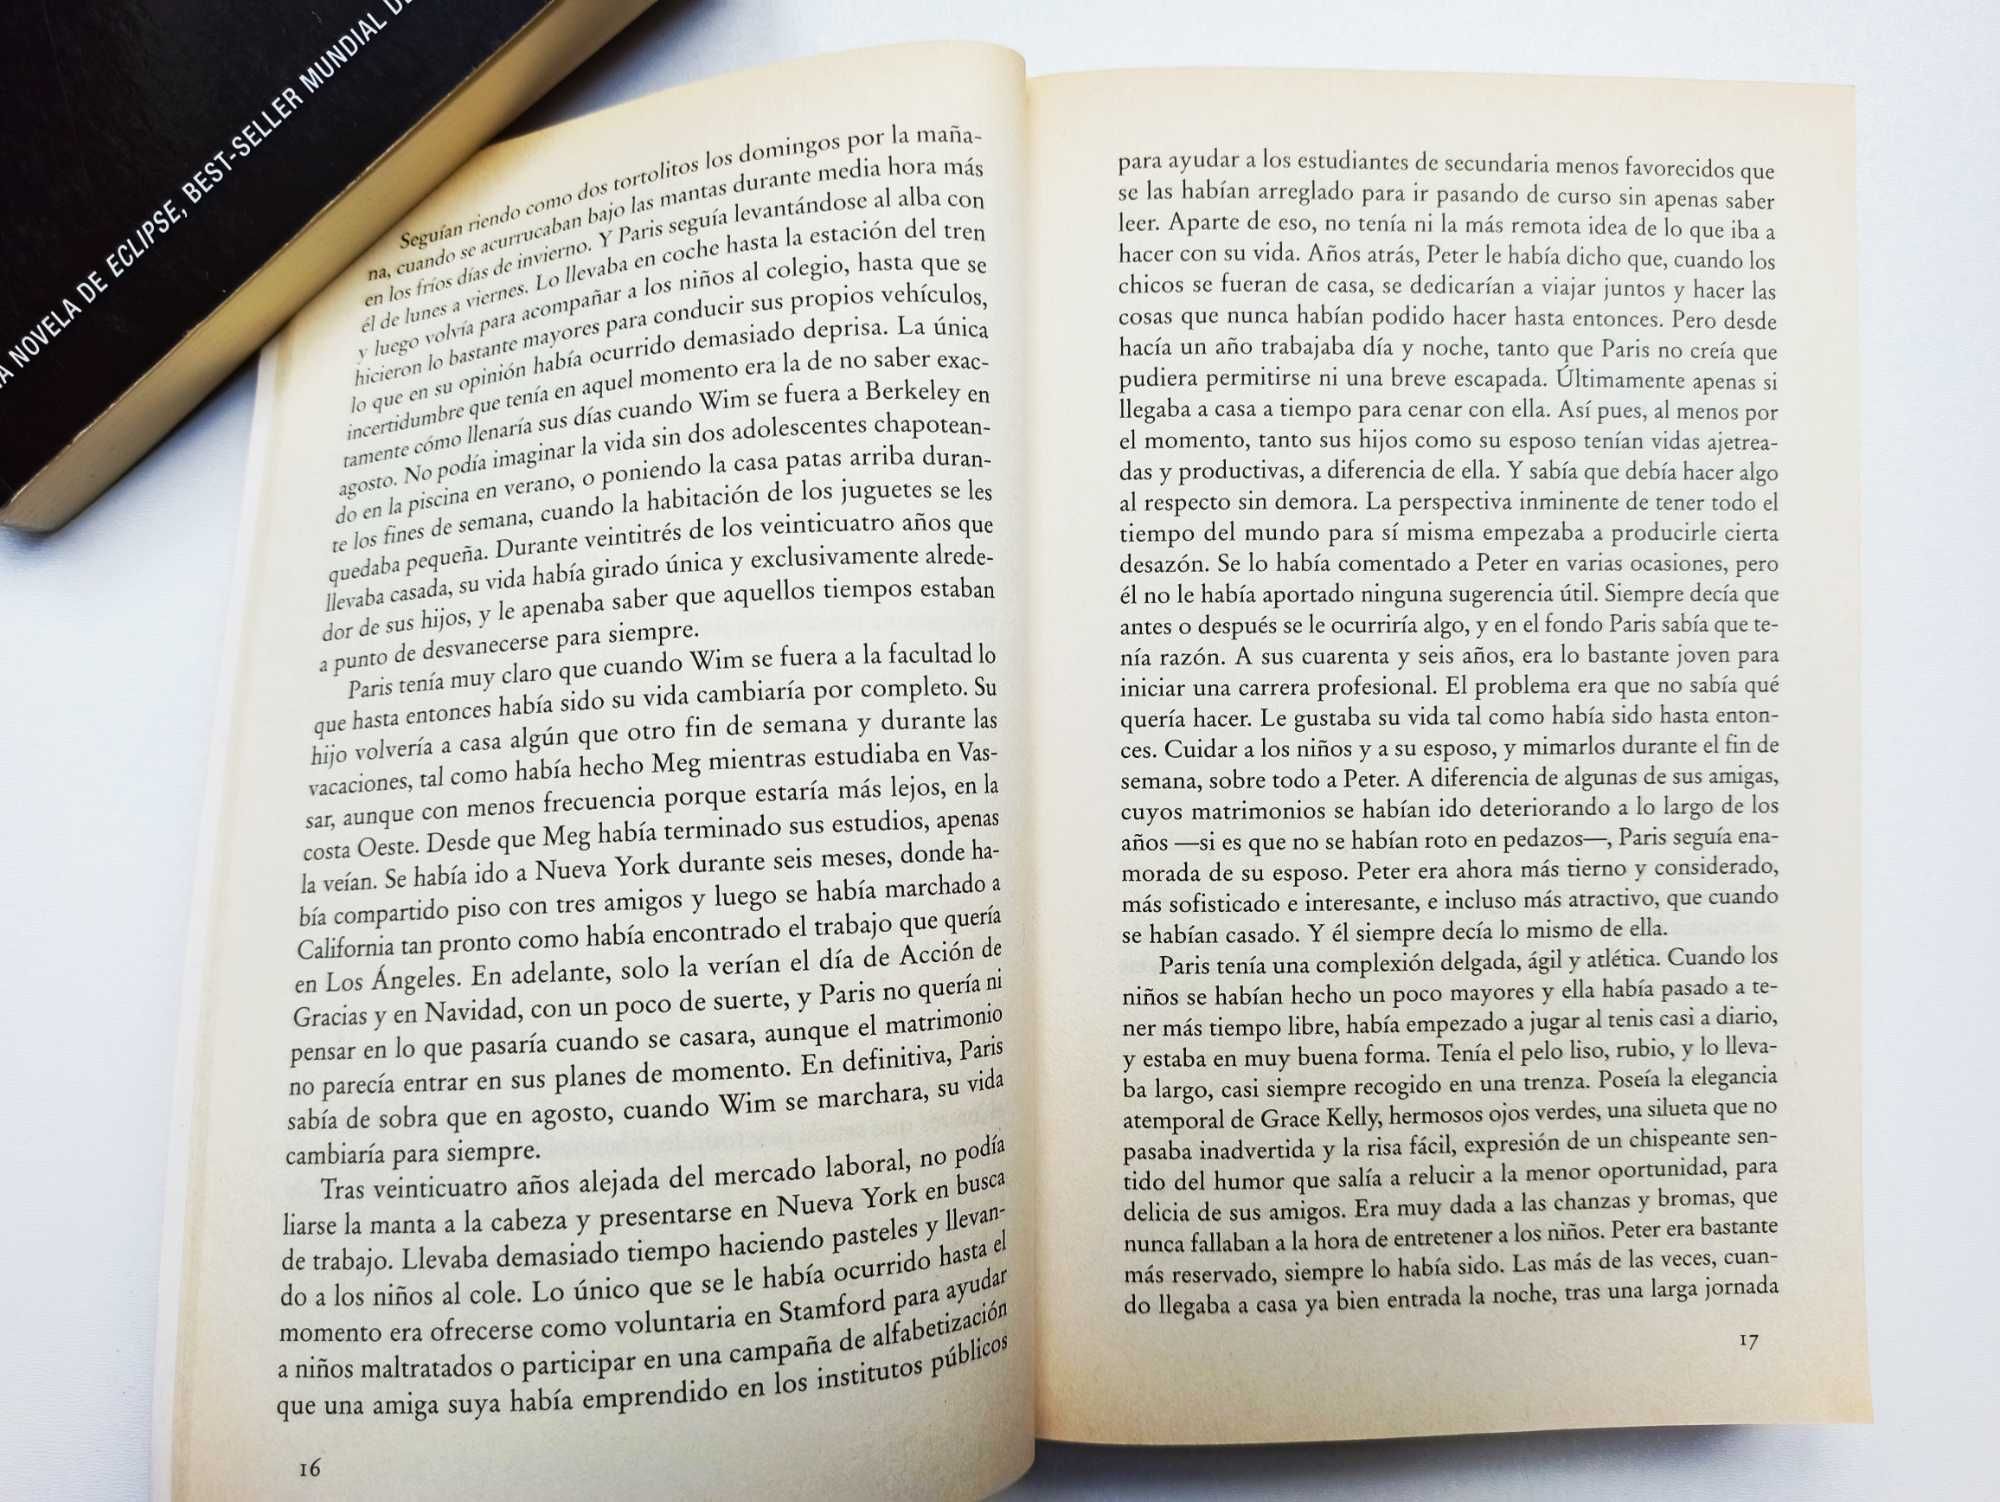 Juegos de citas - Danielle Steel - książka po hiszpańsku